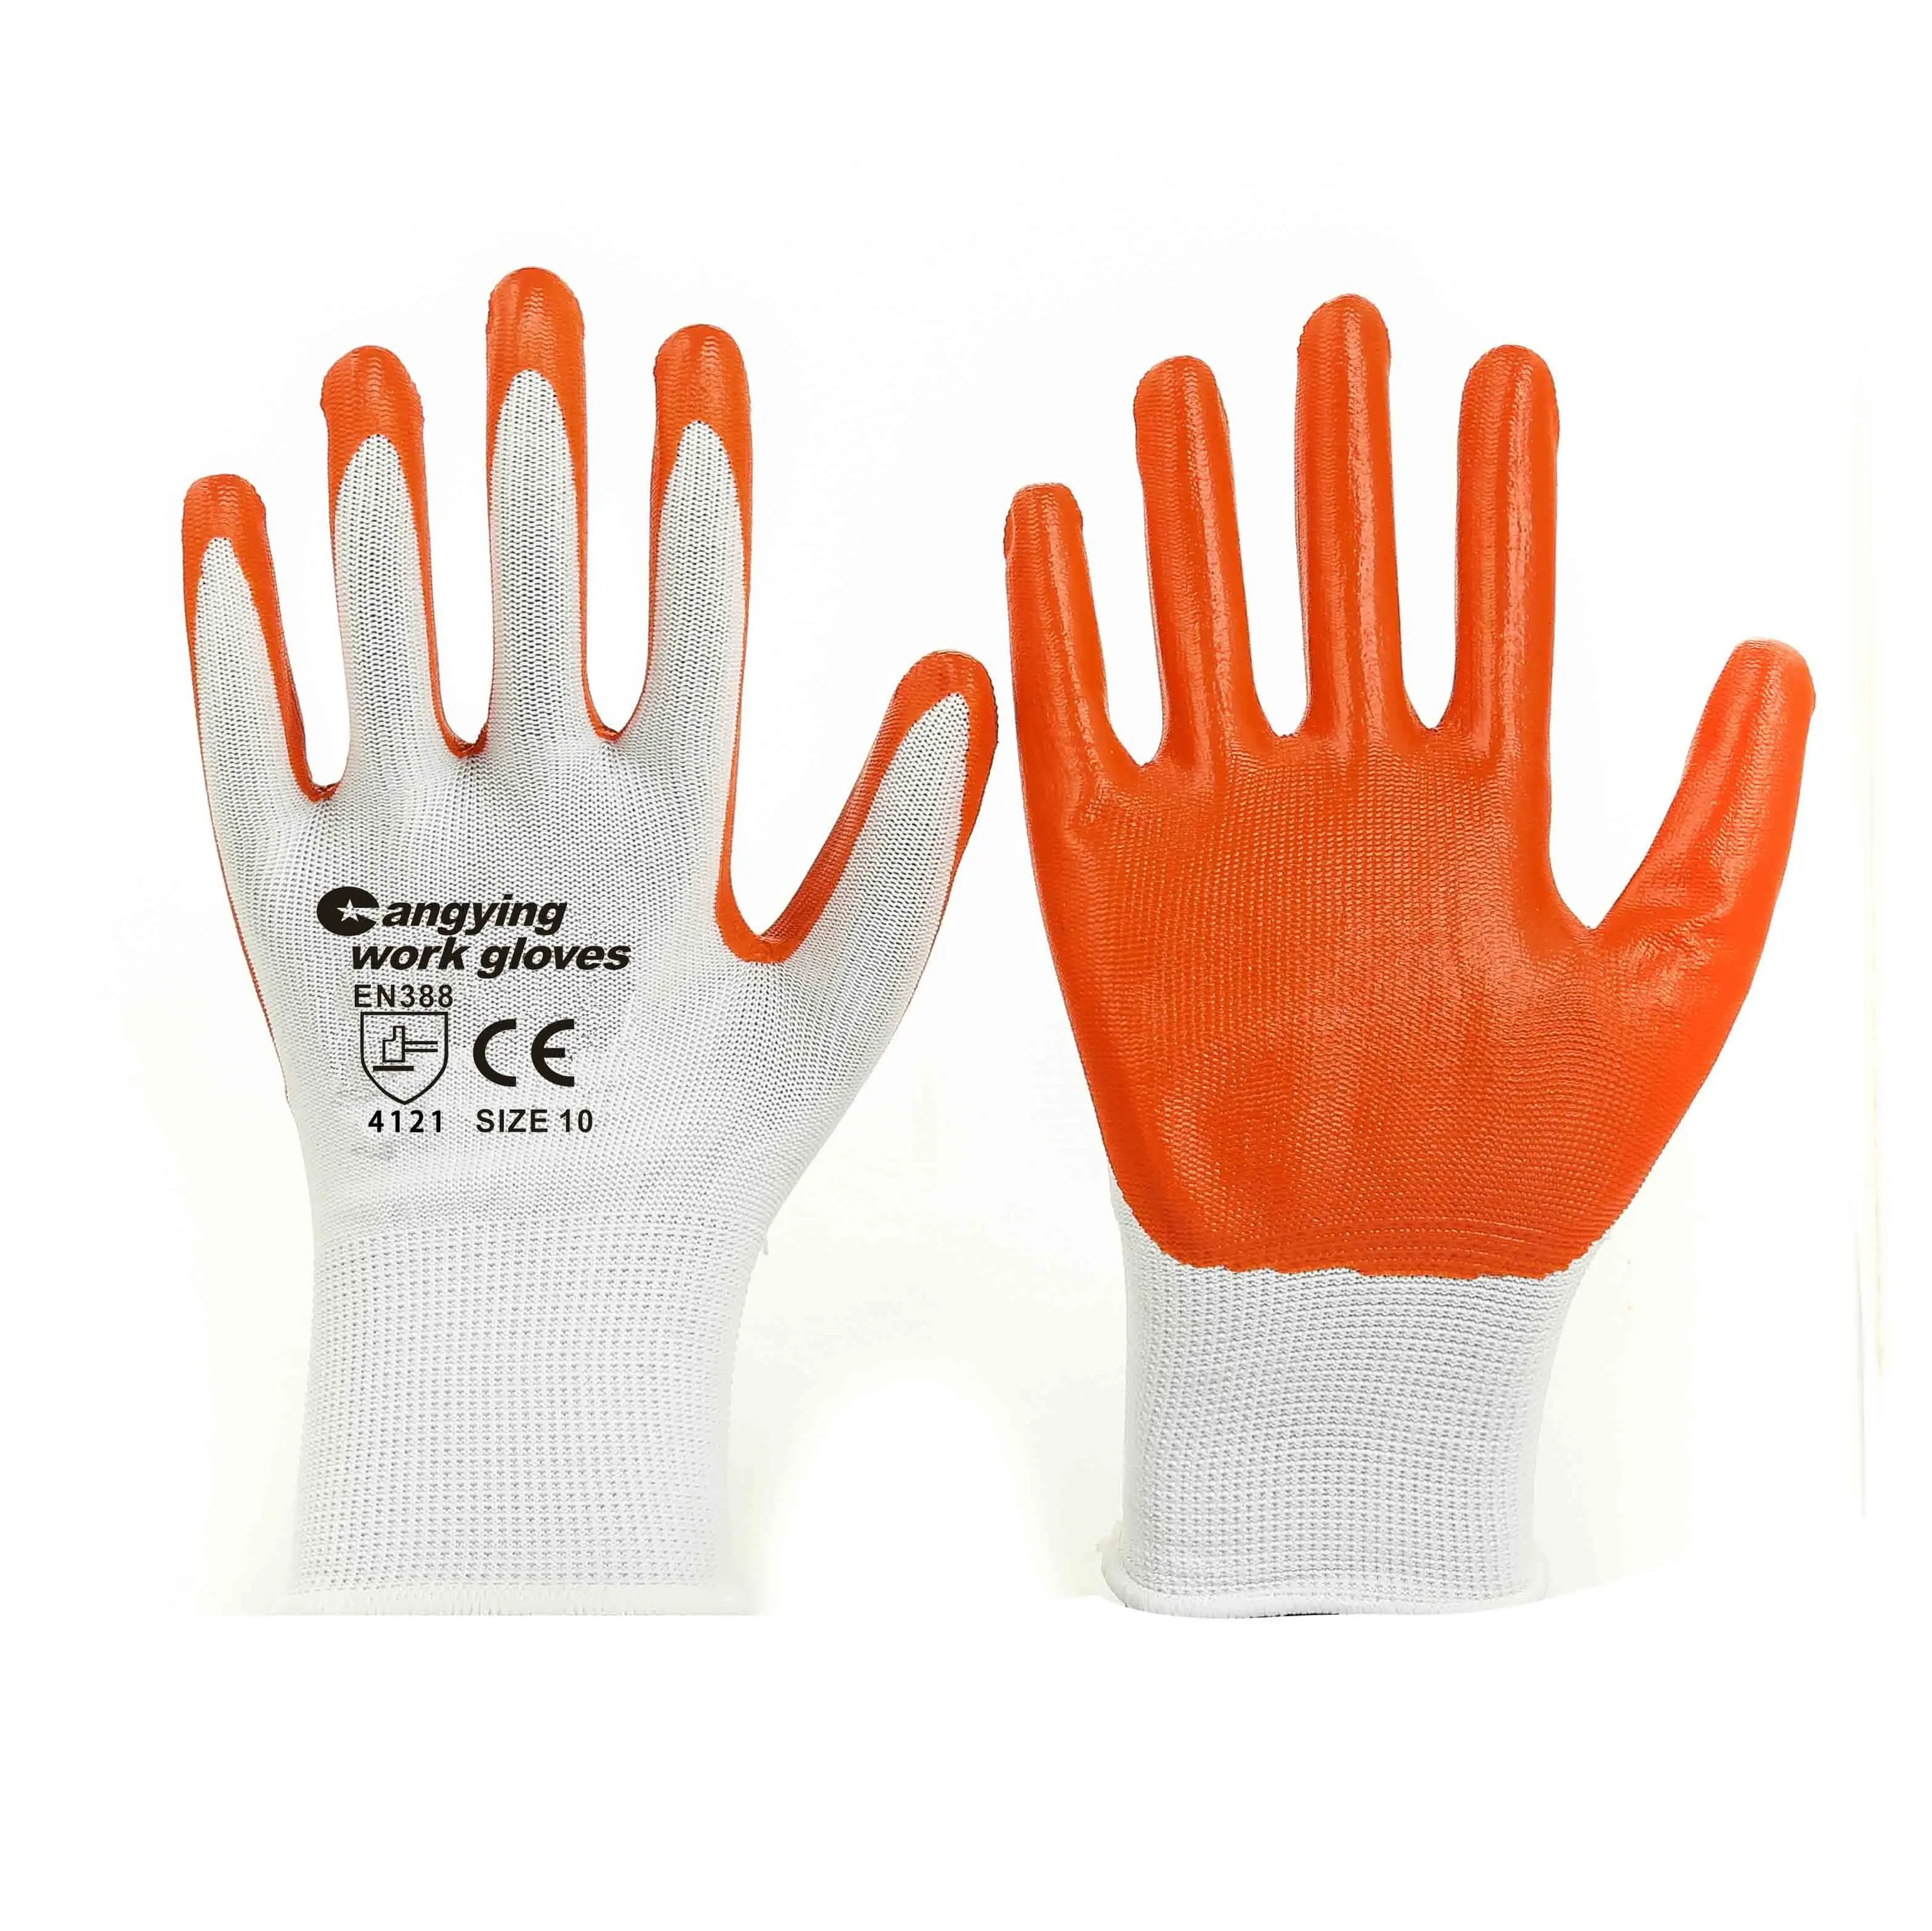 13 Gauge Polyester Strick handschuhe guter Griff orange Nitril handschuhe Gartenarbeit en388 Handschuhe arbeiten